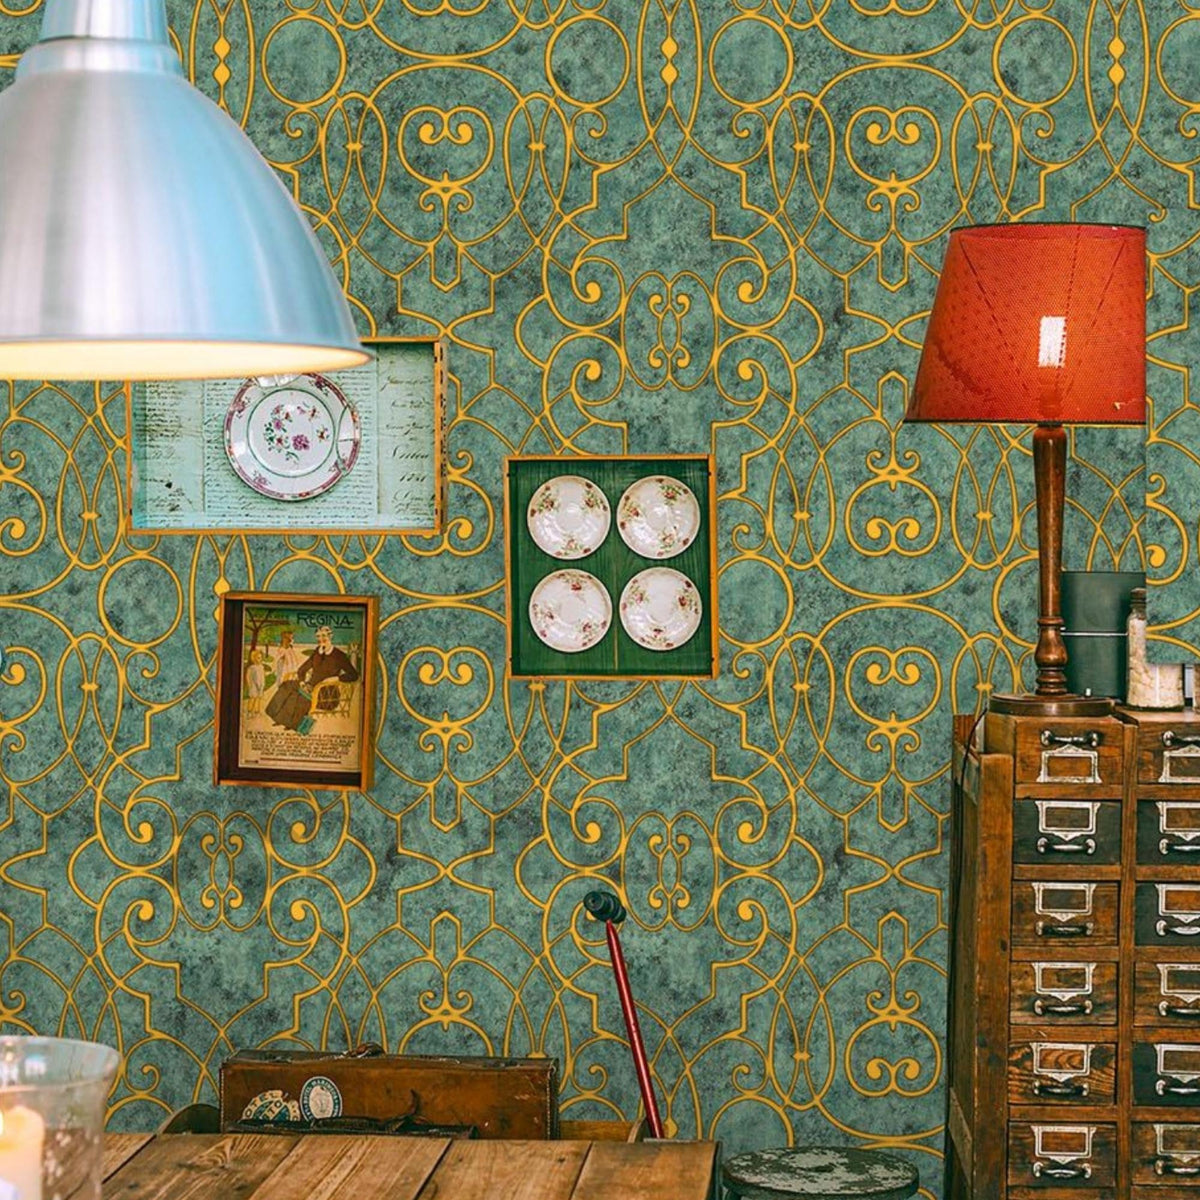 Green & Golden Damask Design Wallpaper Roll for Wall Covering Living Room, Bedroom Wall Tejas